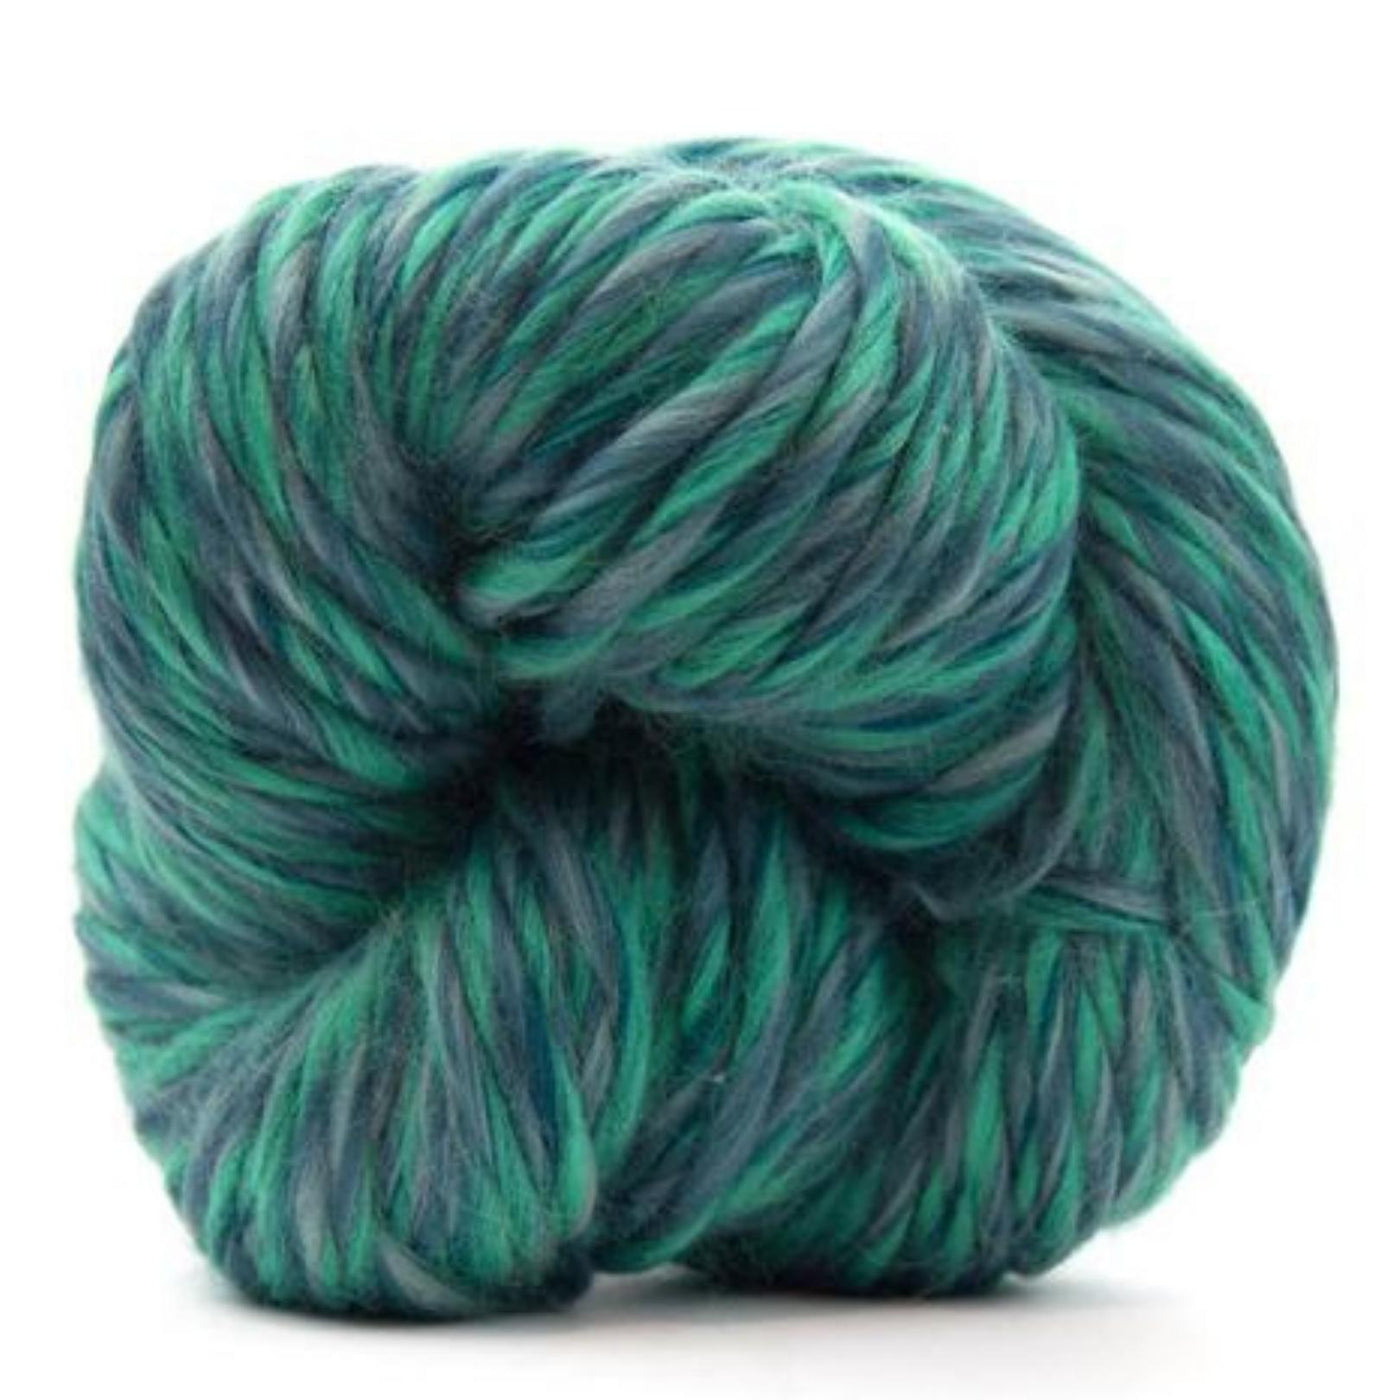 Premium Super Bulky (Chunky) Weight Multicolored Merino Yarn-Yarn-Revolution Fibers-Harmony Green-Revolution Fibers